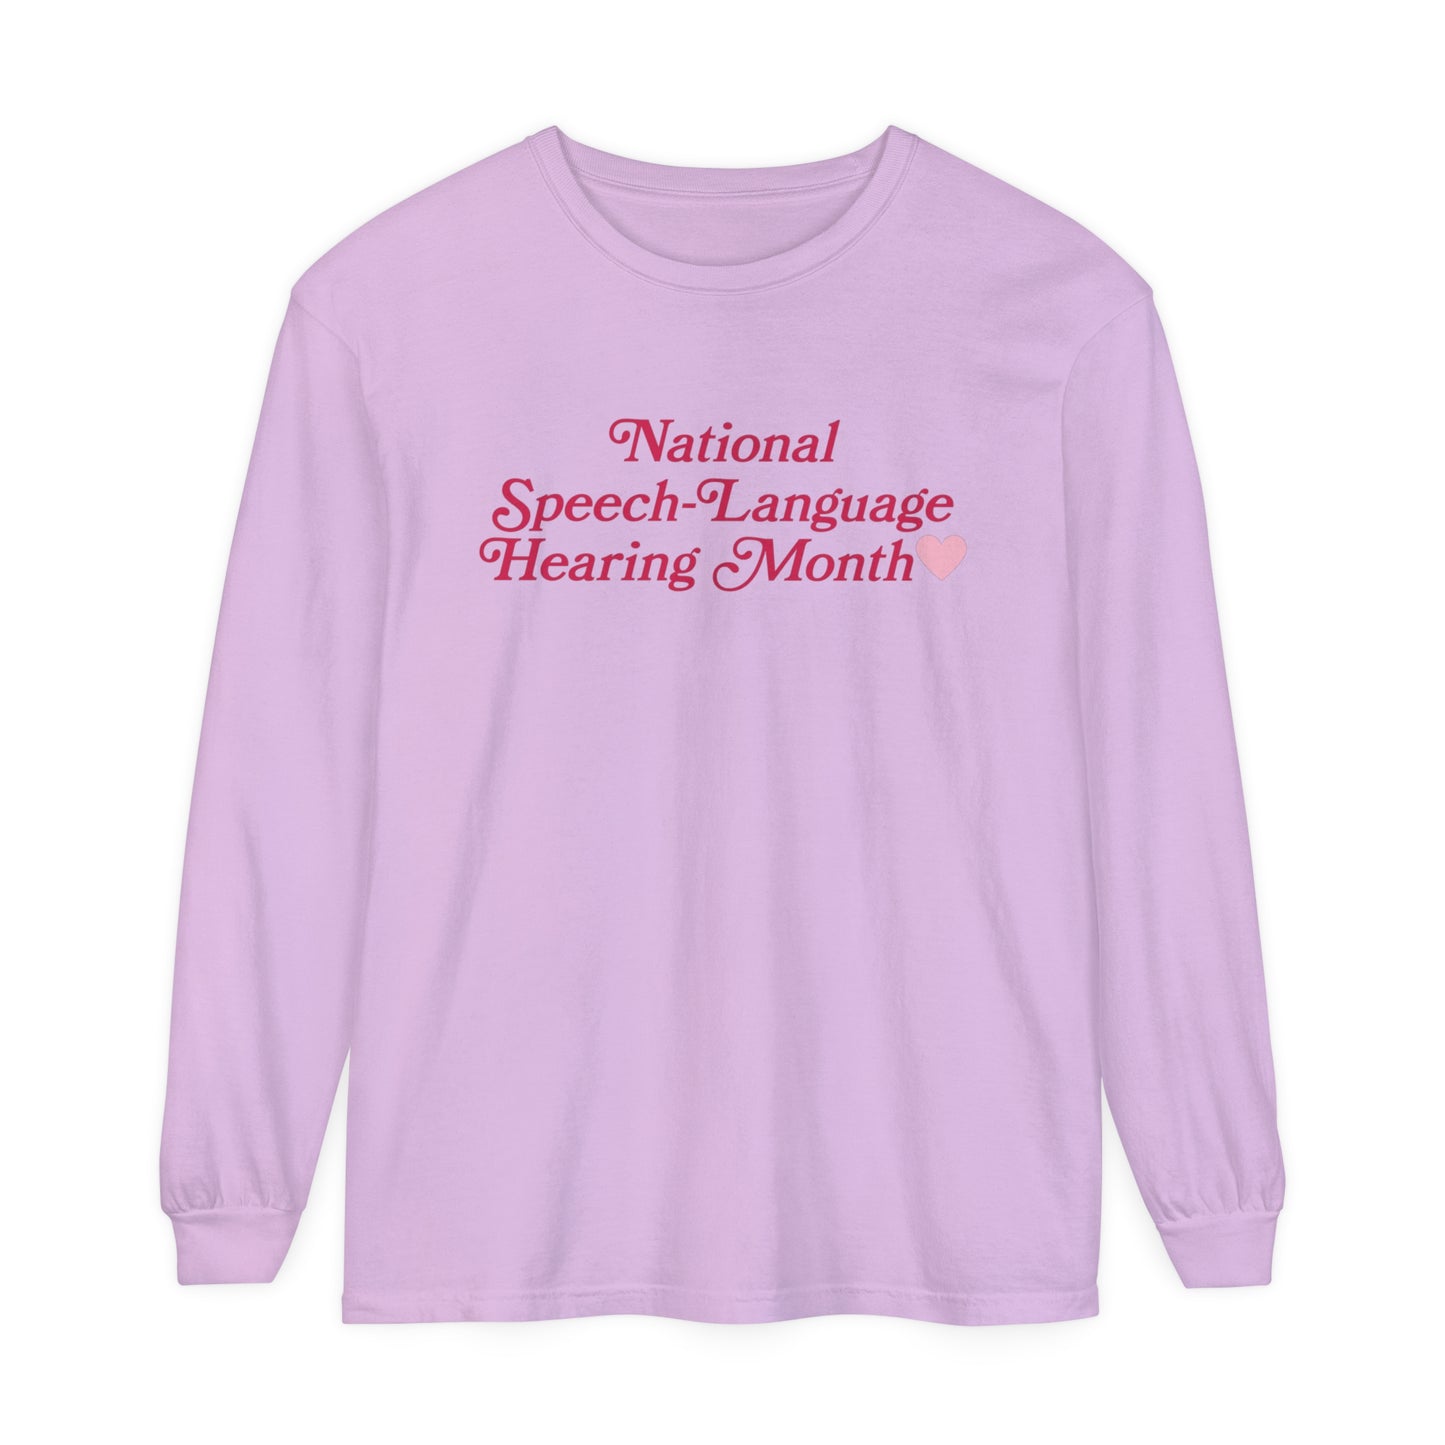 National Speech-Language-Hearing Month Long Sleeve Comfort Colors T-Shirt